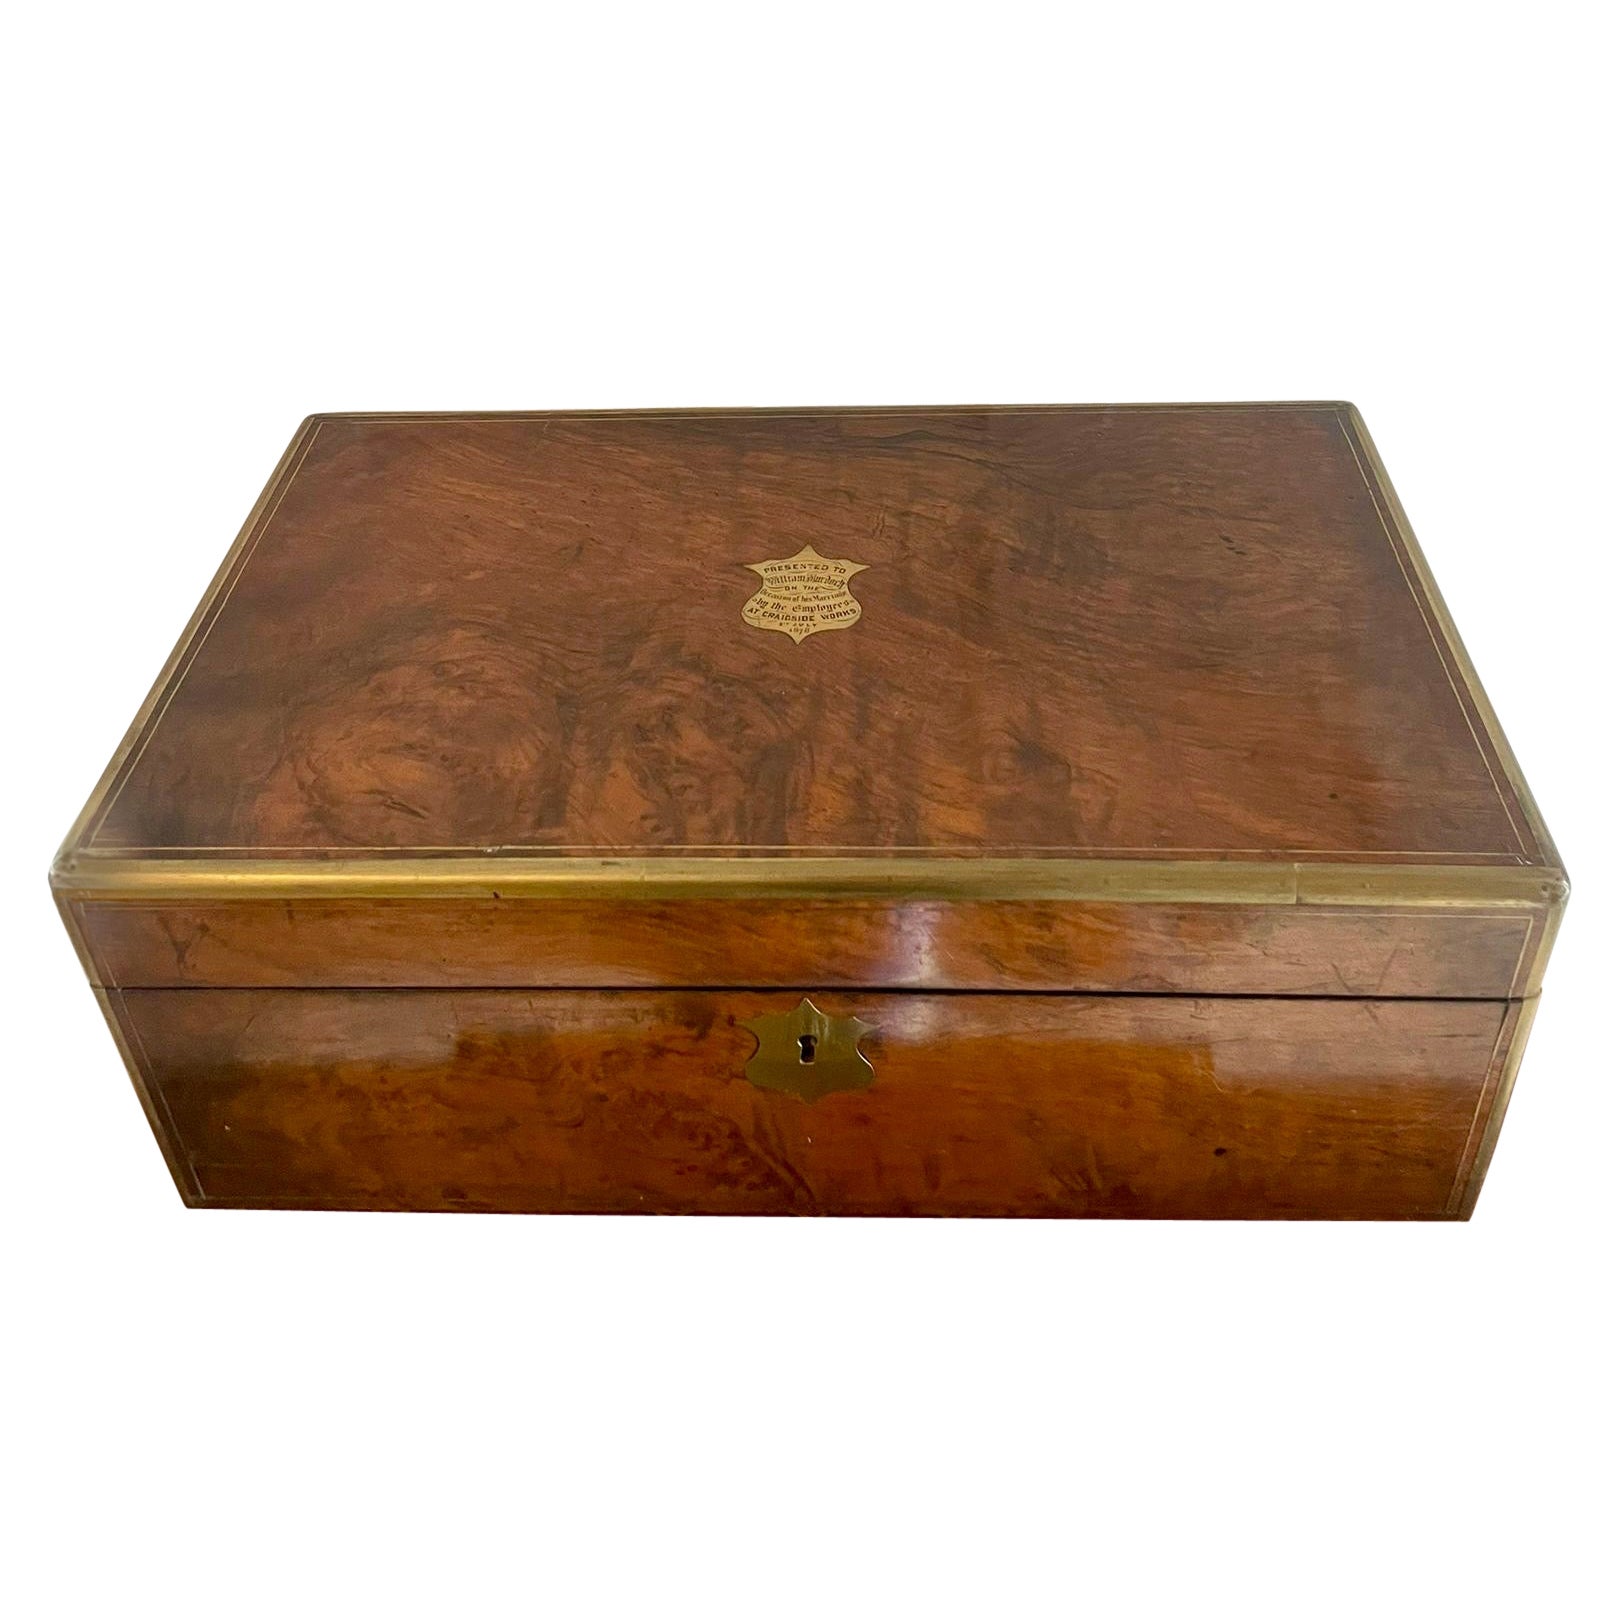 Superb Quality Antique Victorian Burr Walnut Brass Bound Writing Box